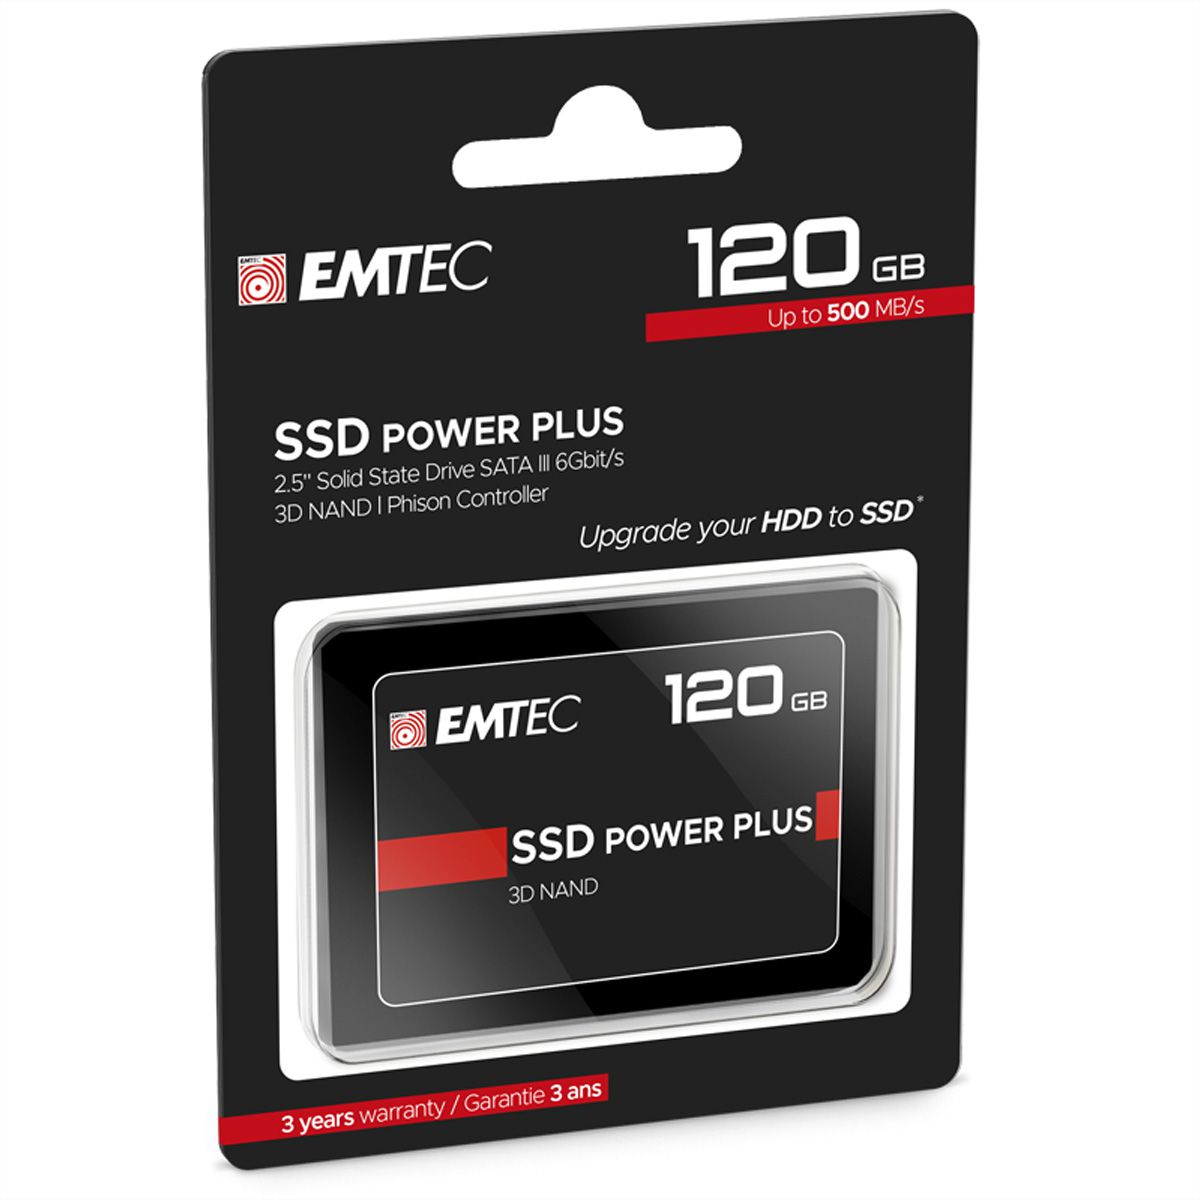 EMTEC SSD interne X150 120GB, SSD Power Plus, 2.5, SATA III 6GB/s